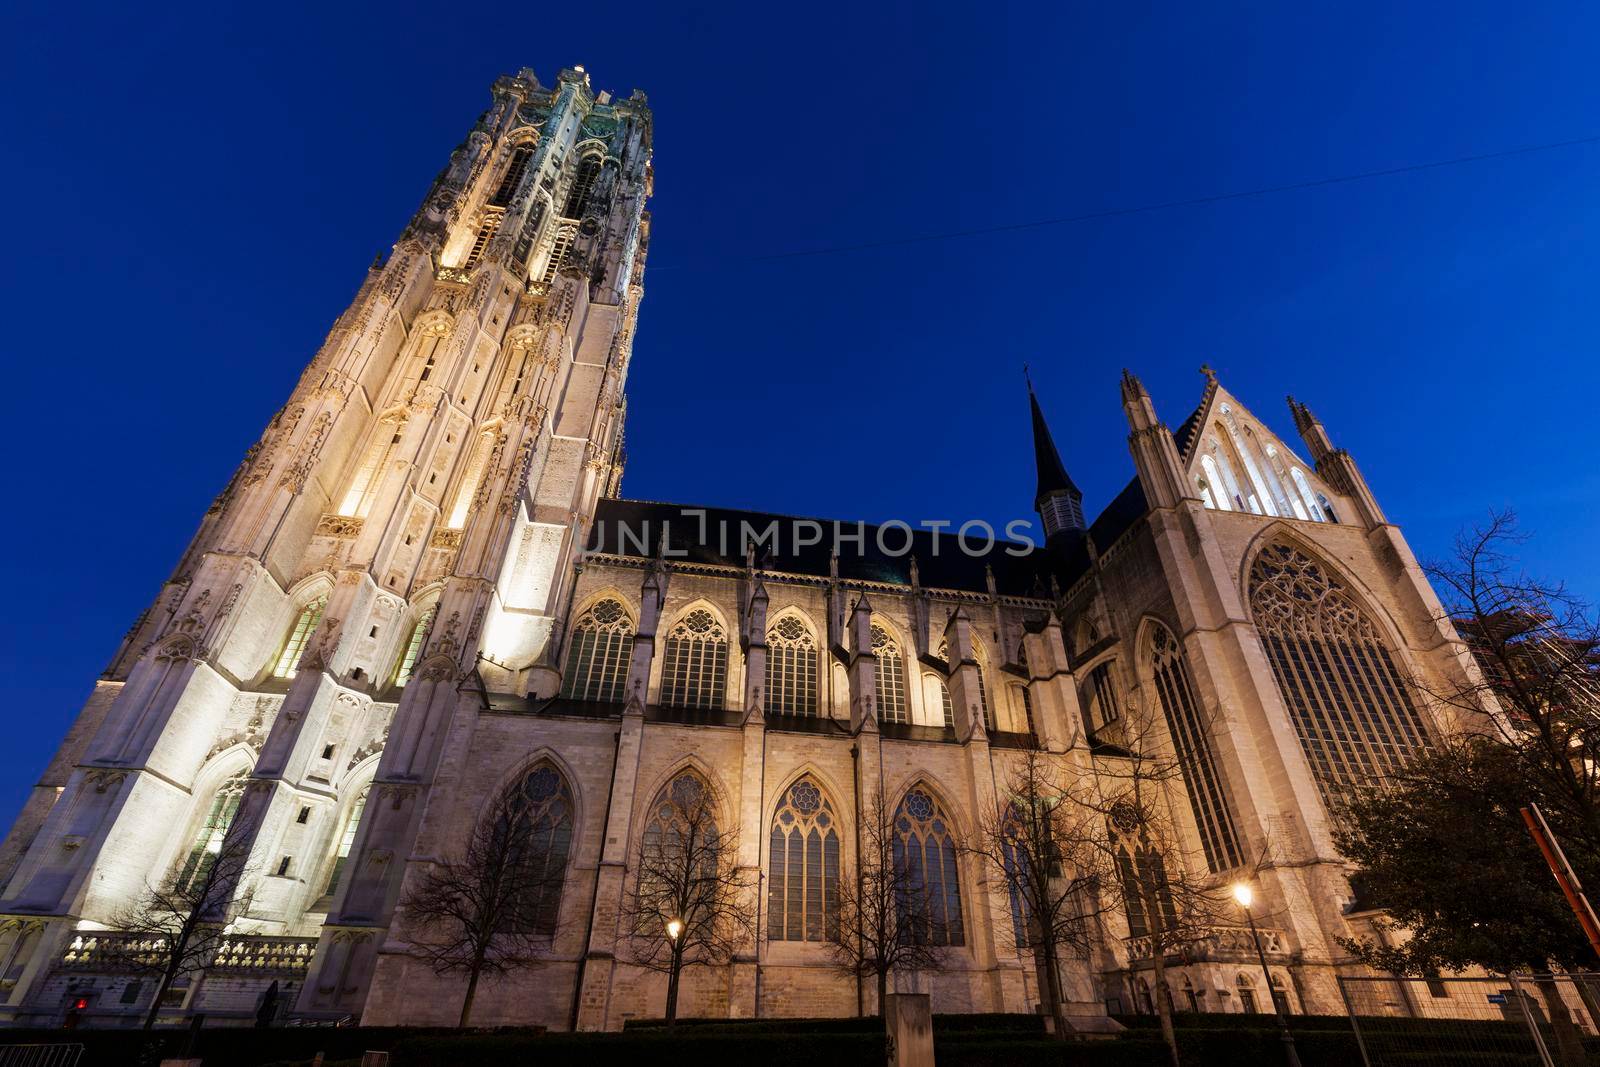 Saint Rumbold's Cathedral in Mechelen by benkrut